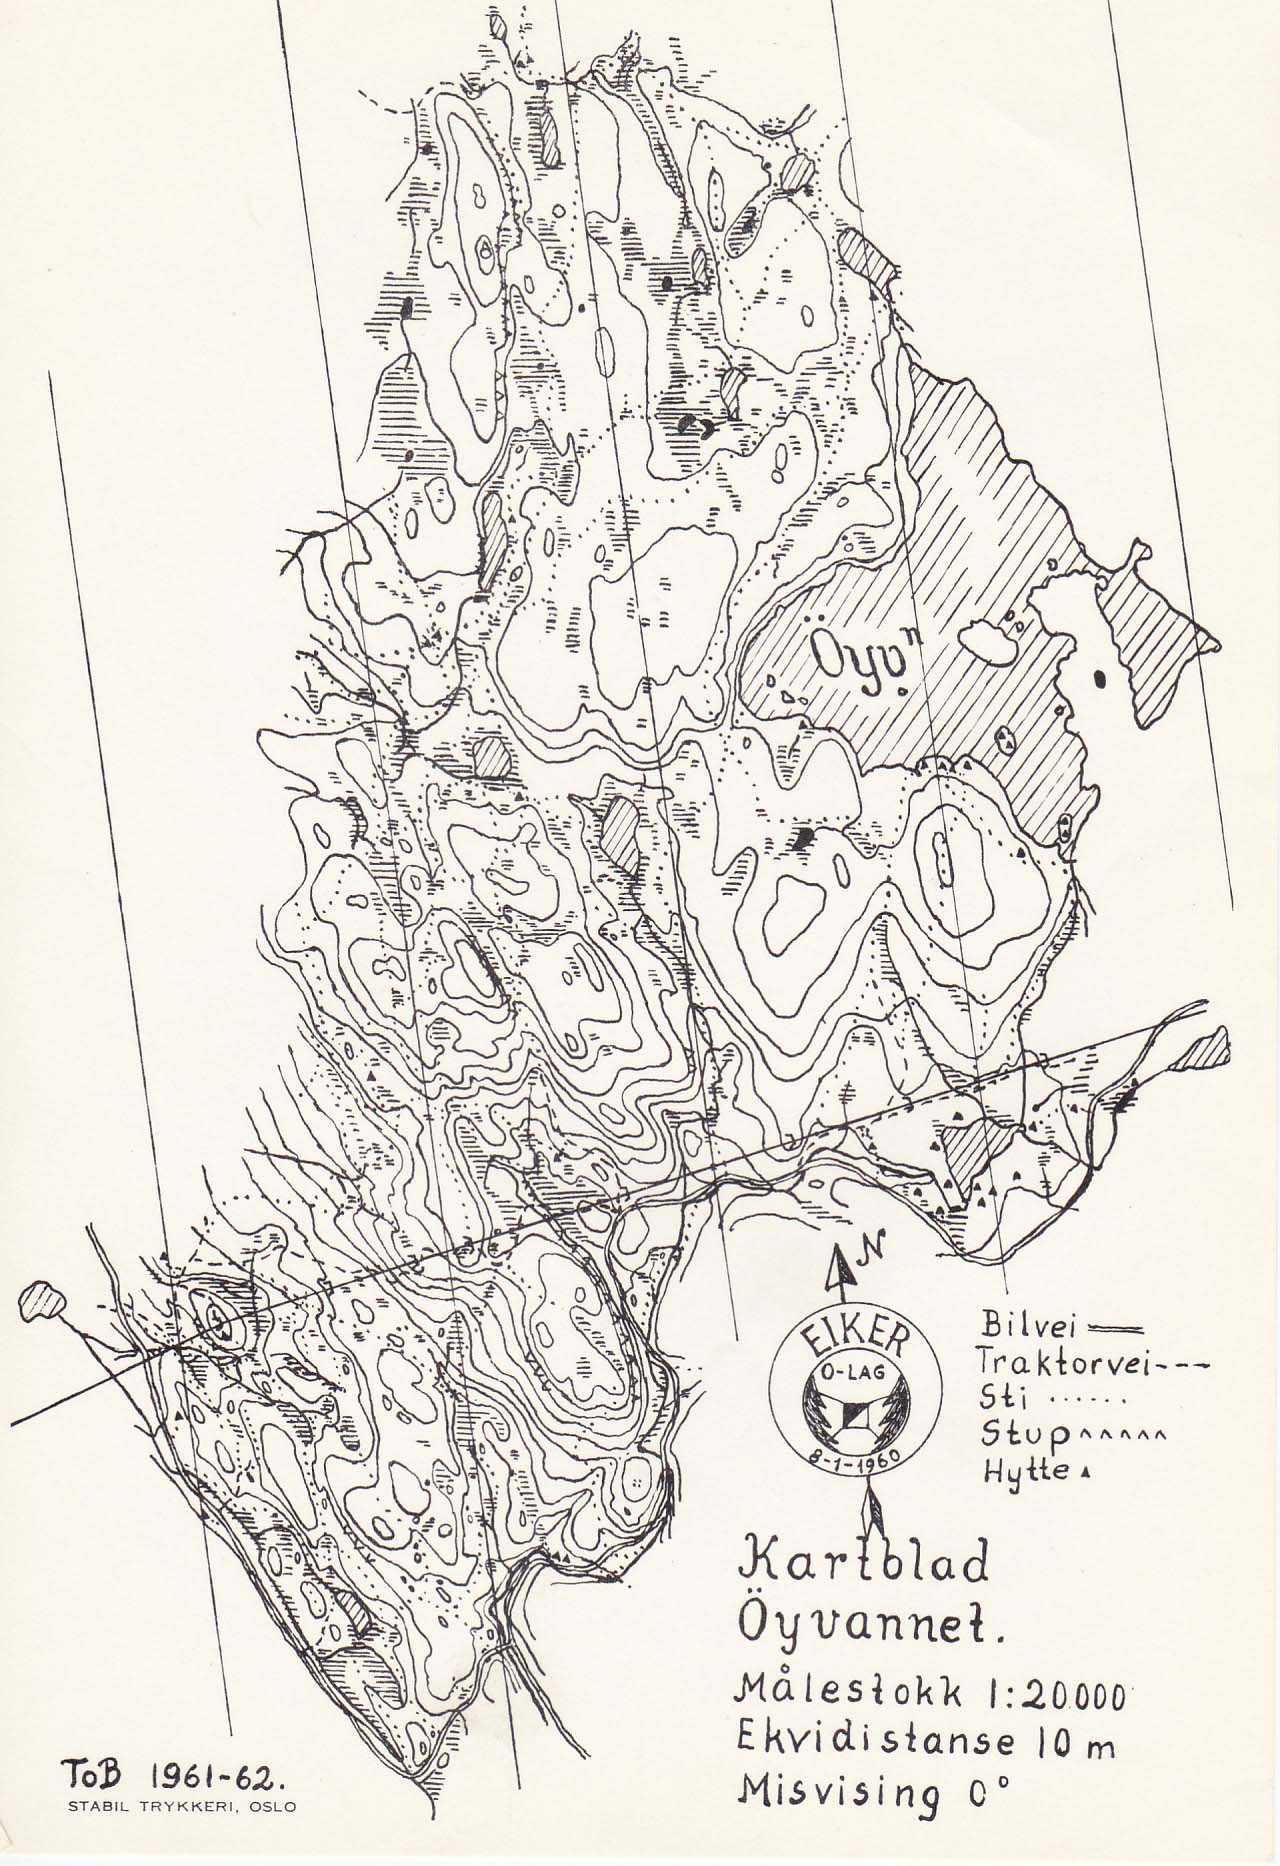 Øyvannet (01.05.1962)